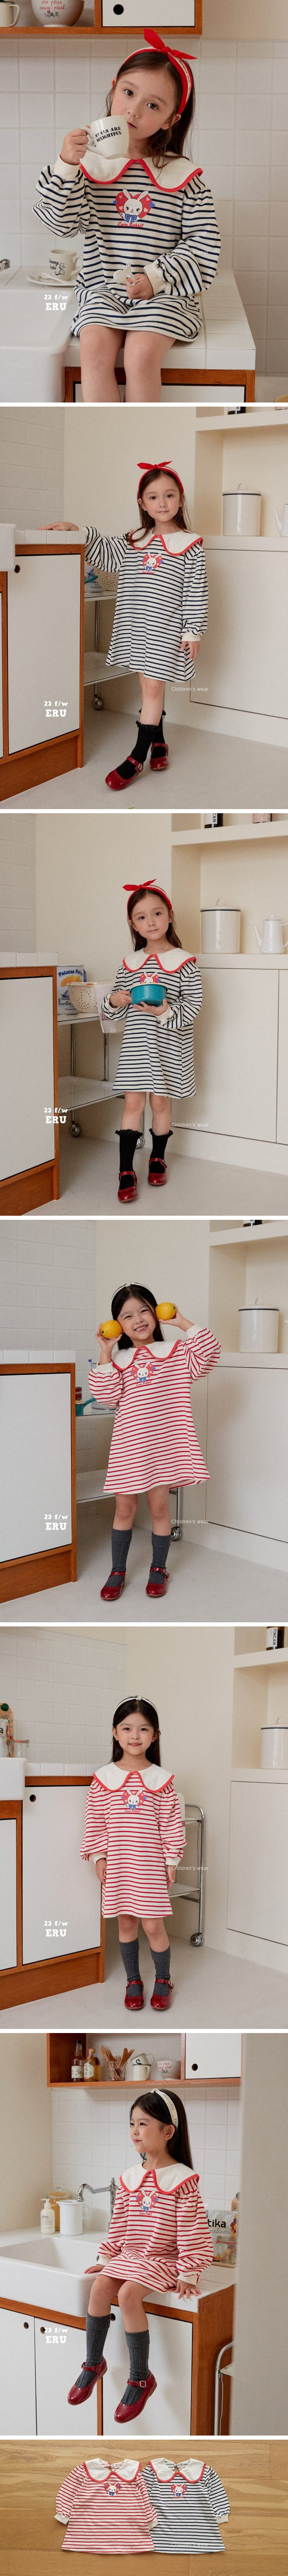 e.ru - Korean Children Fashion - #todddlerfashion - Cuty One-piece